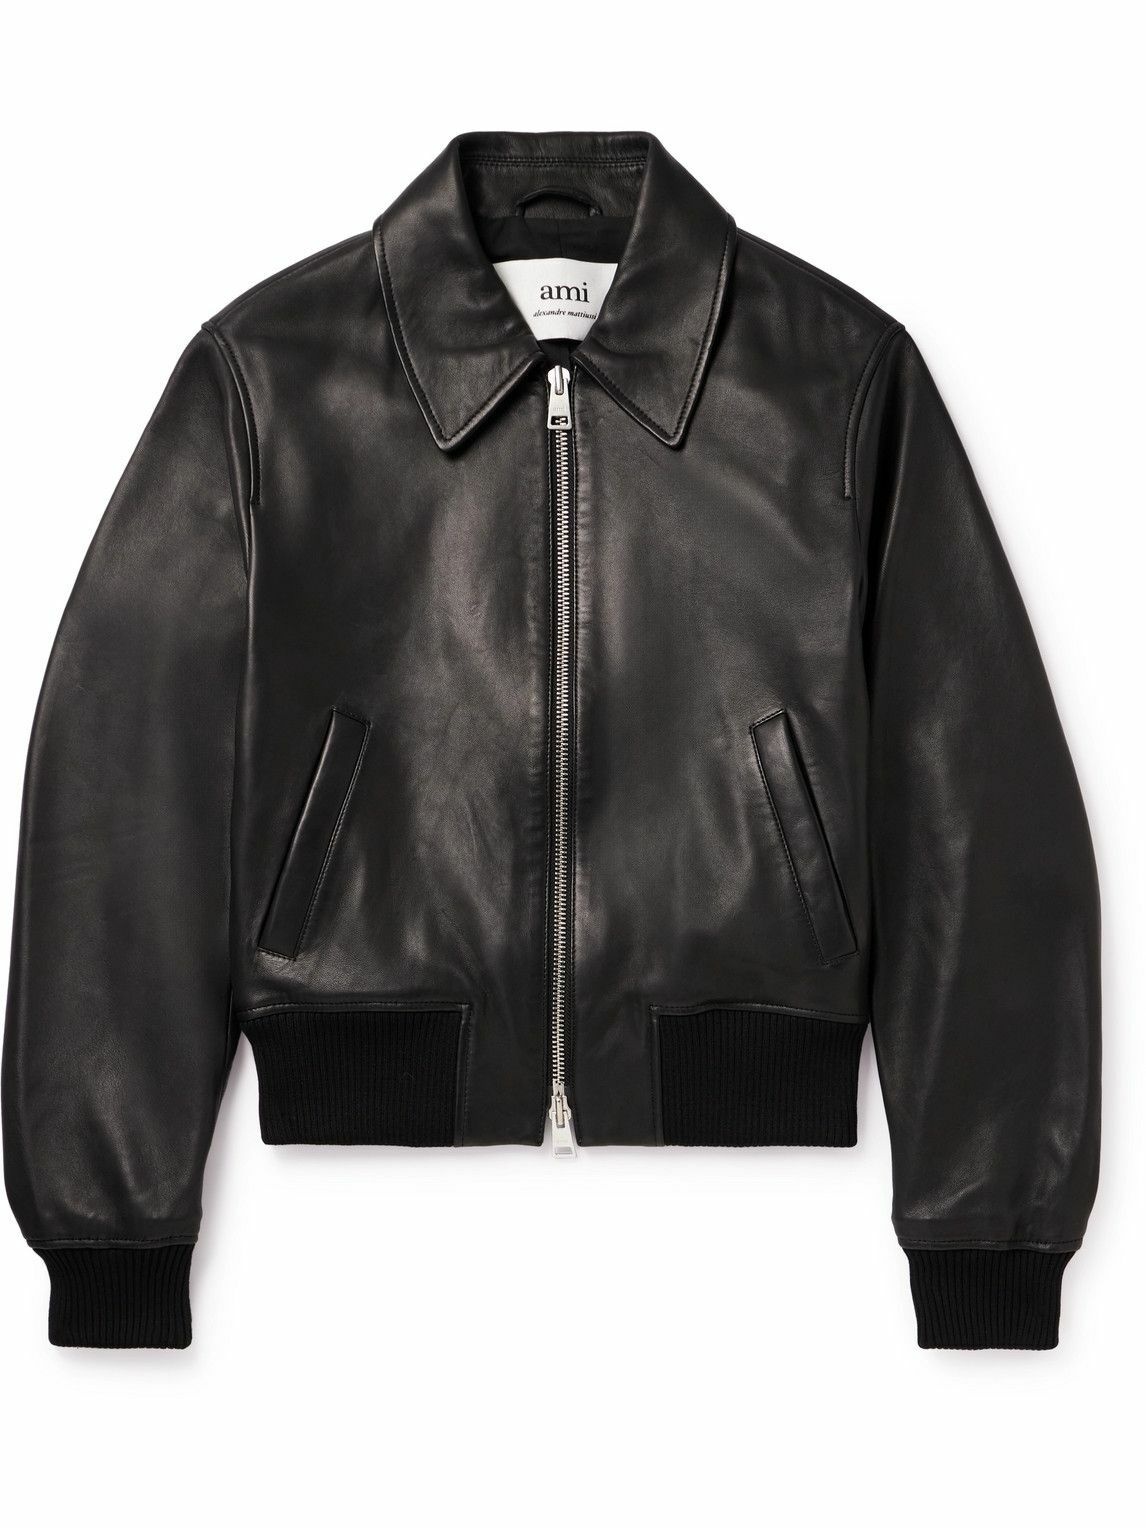 Photo: AMI PARIS - Full-Grain Leather Jacket - Black